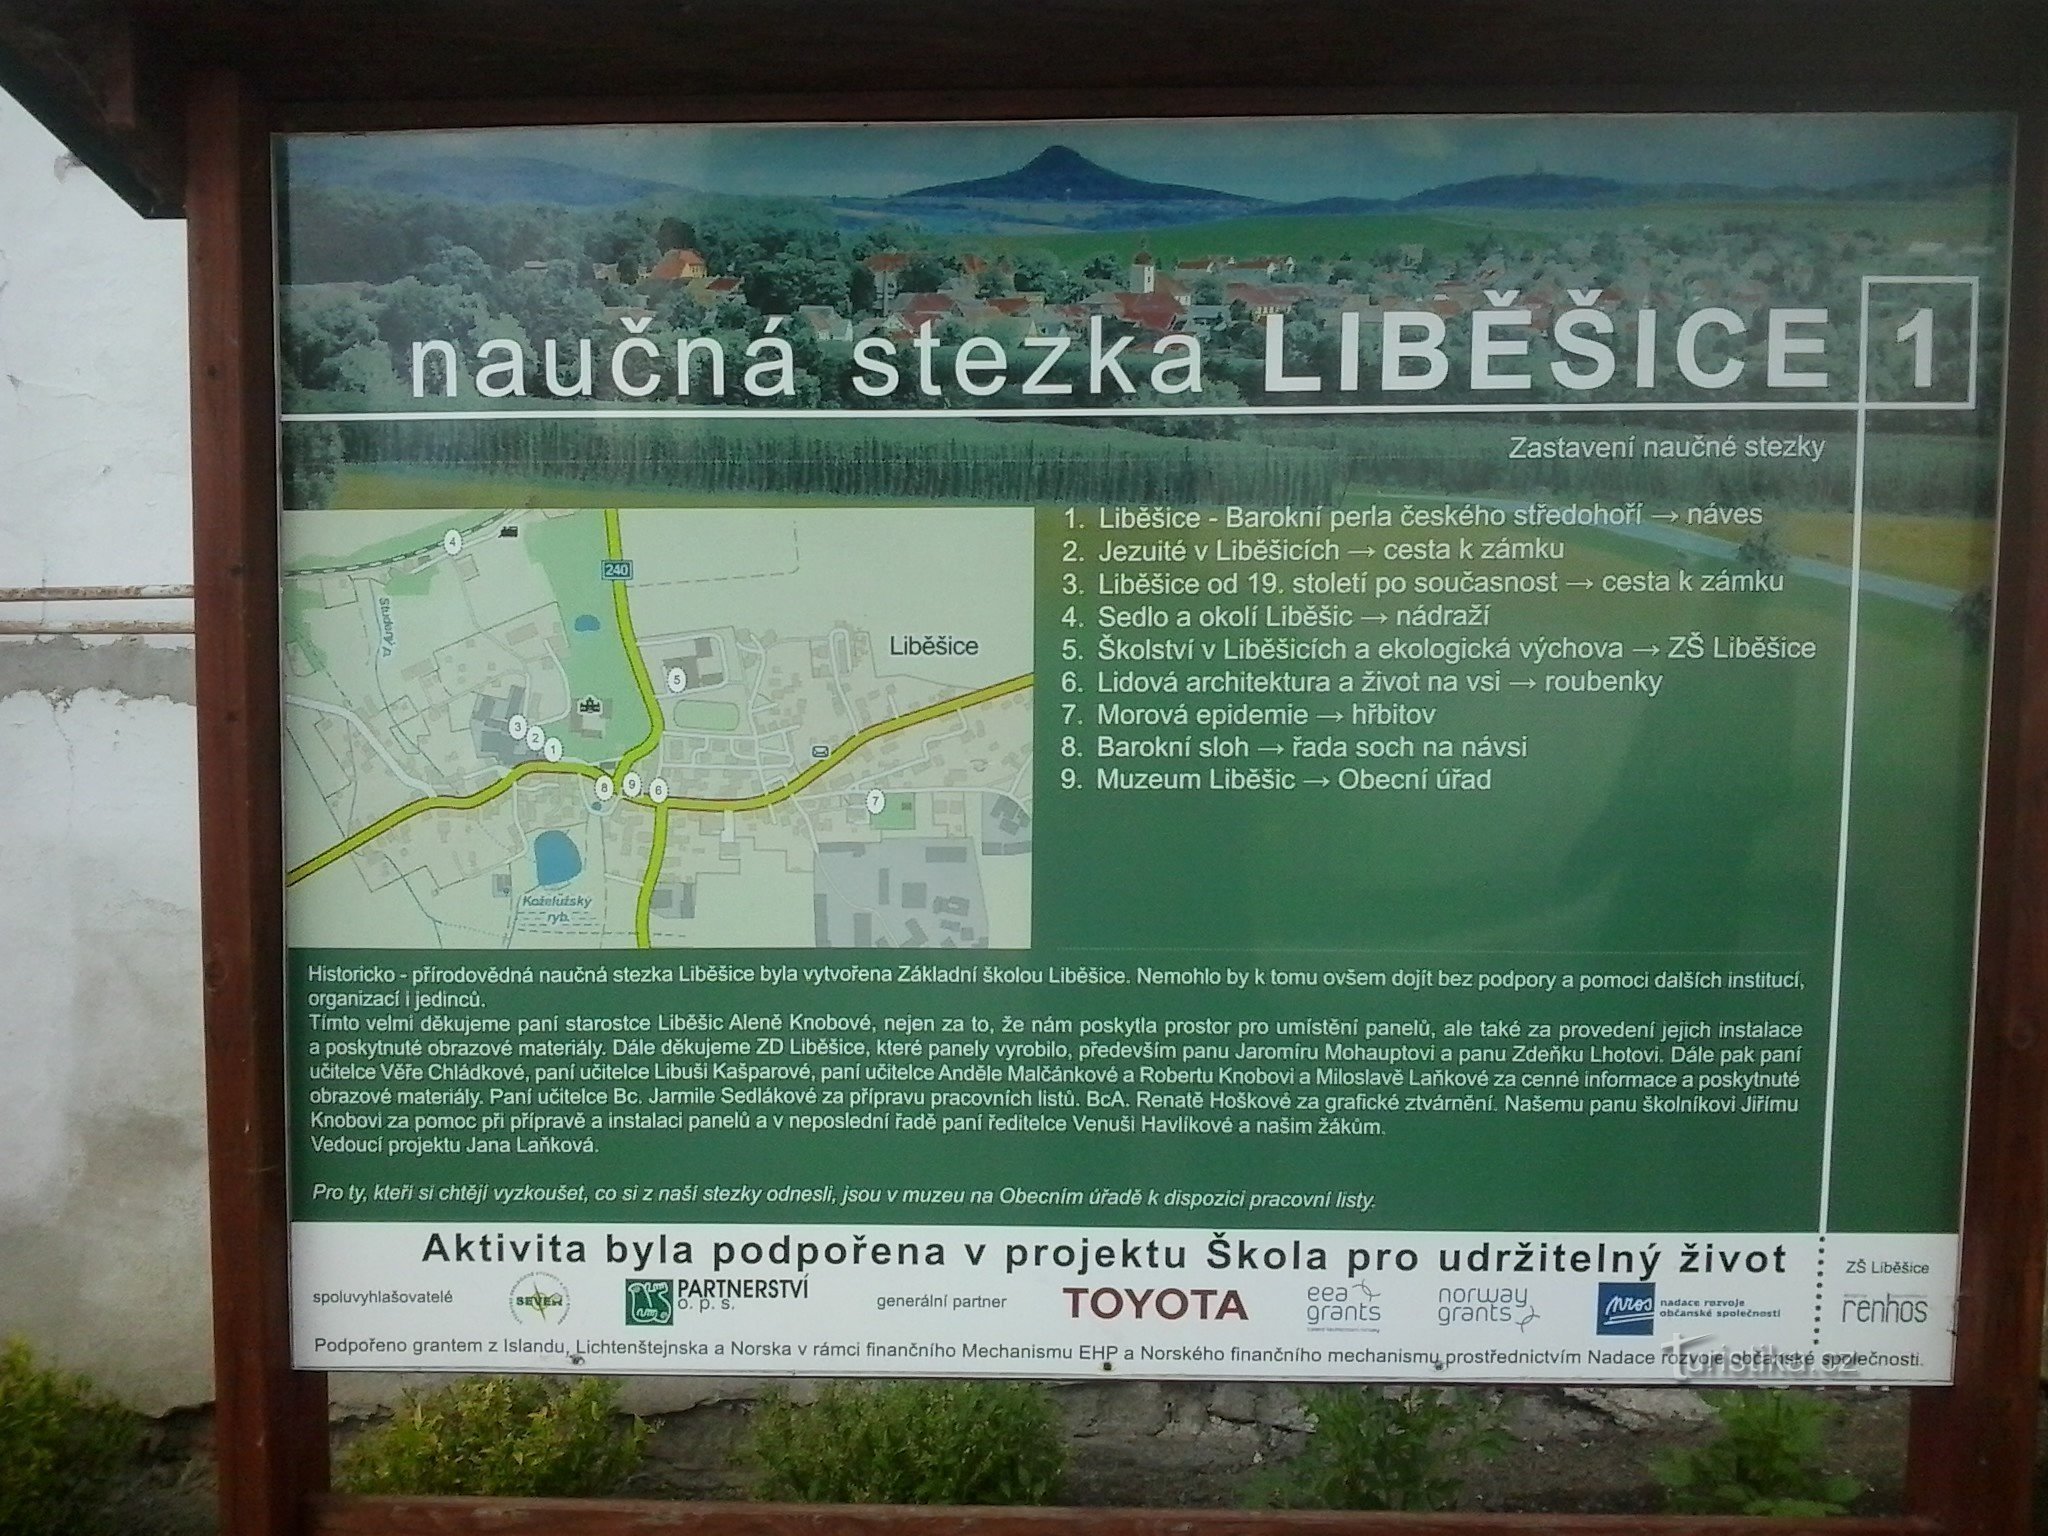 Educational trail Liběšice